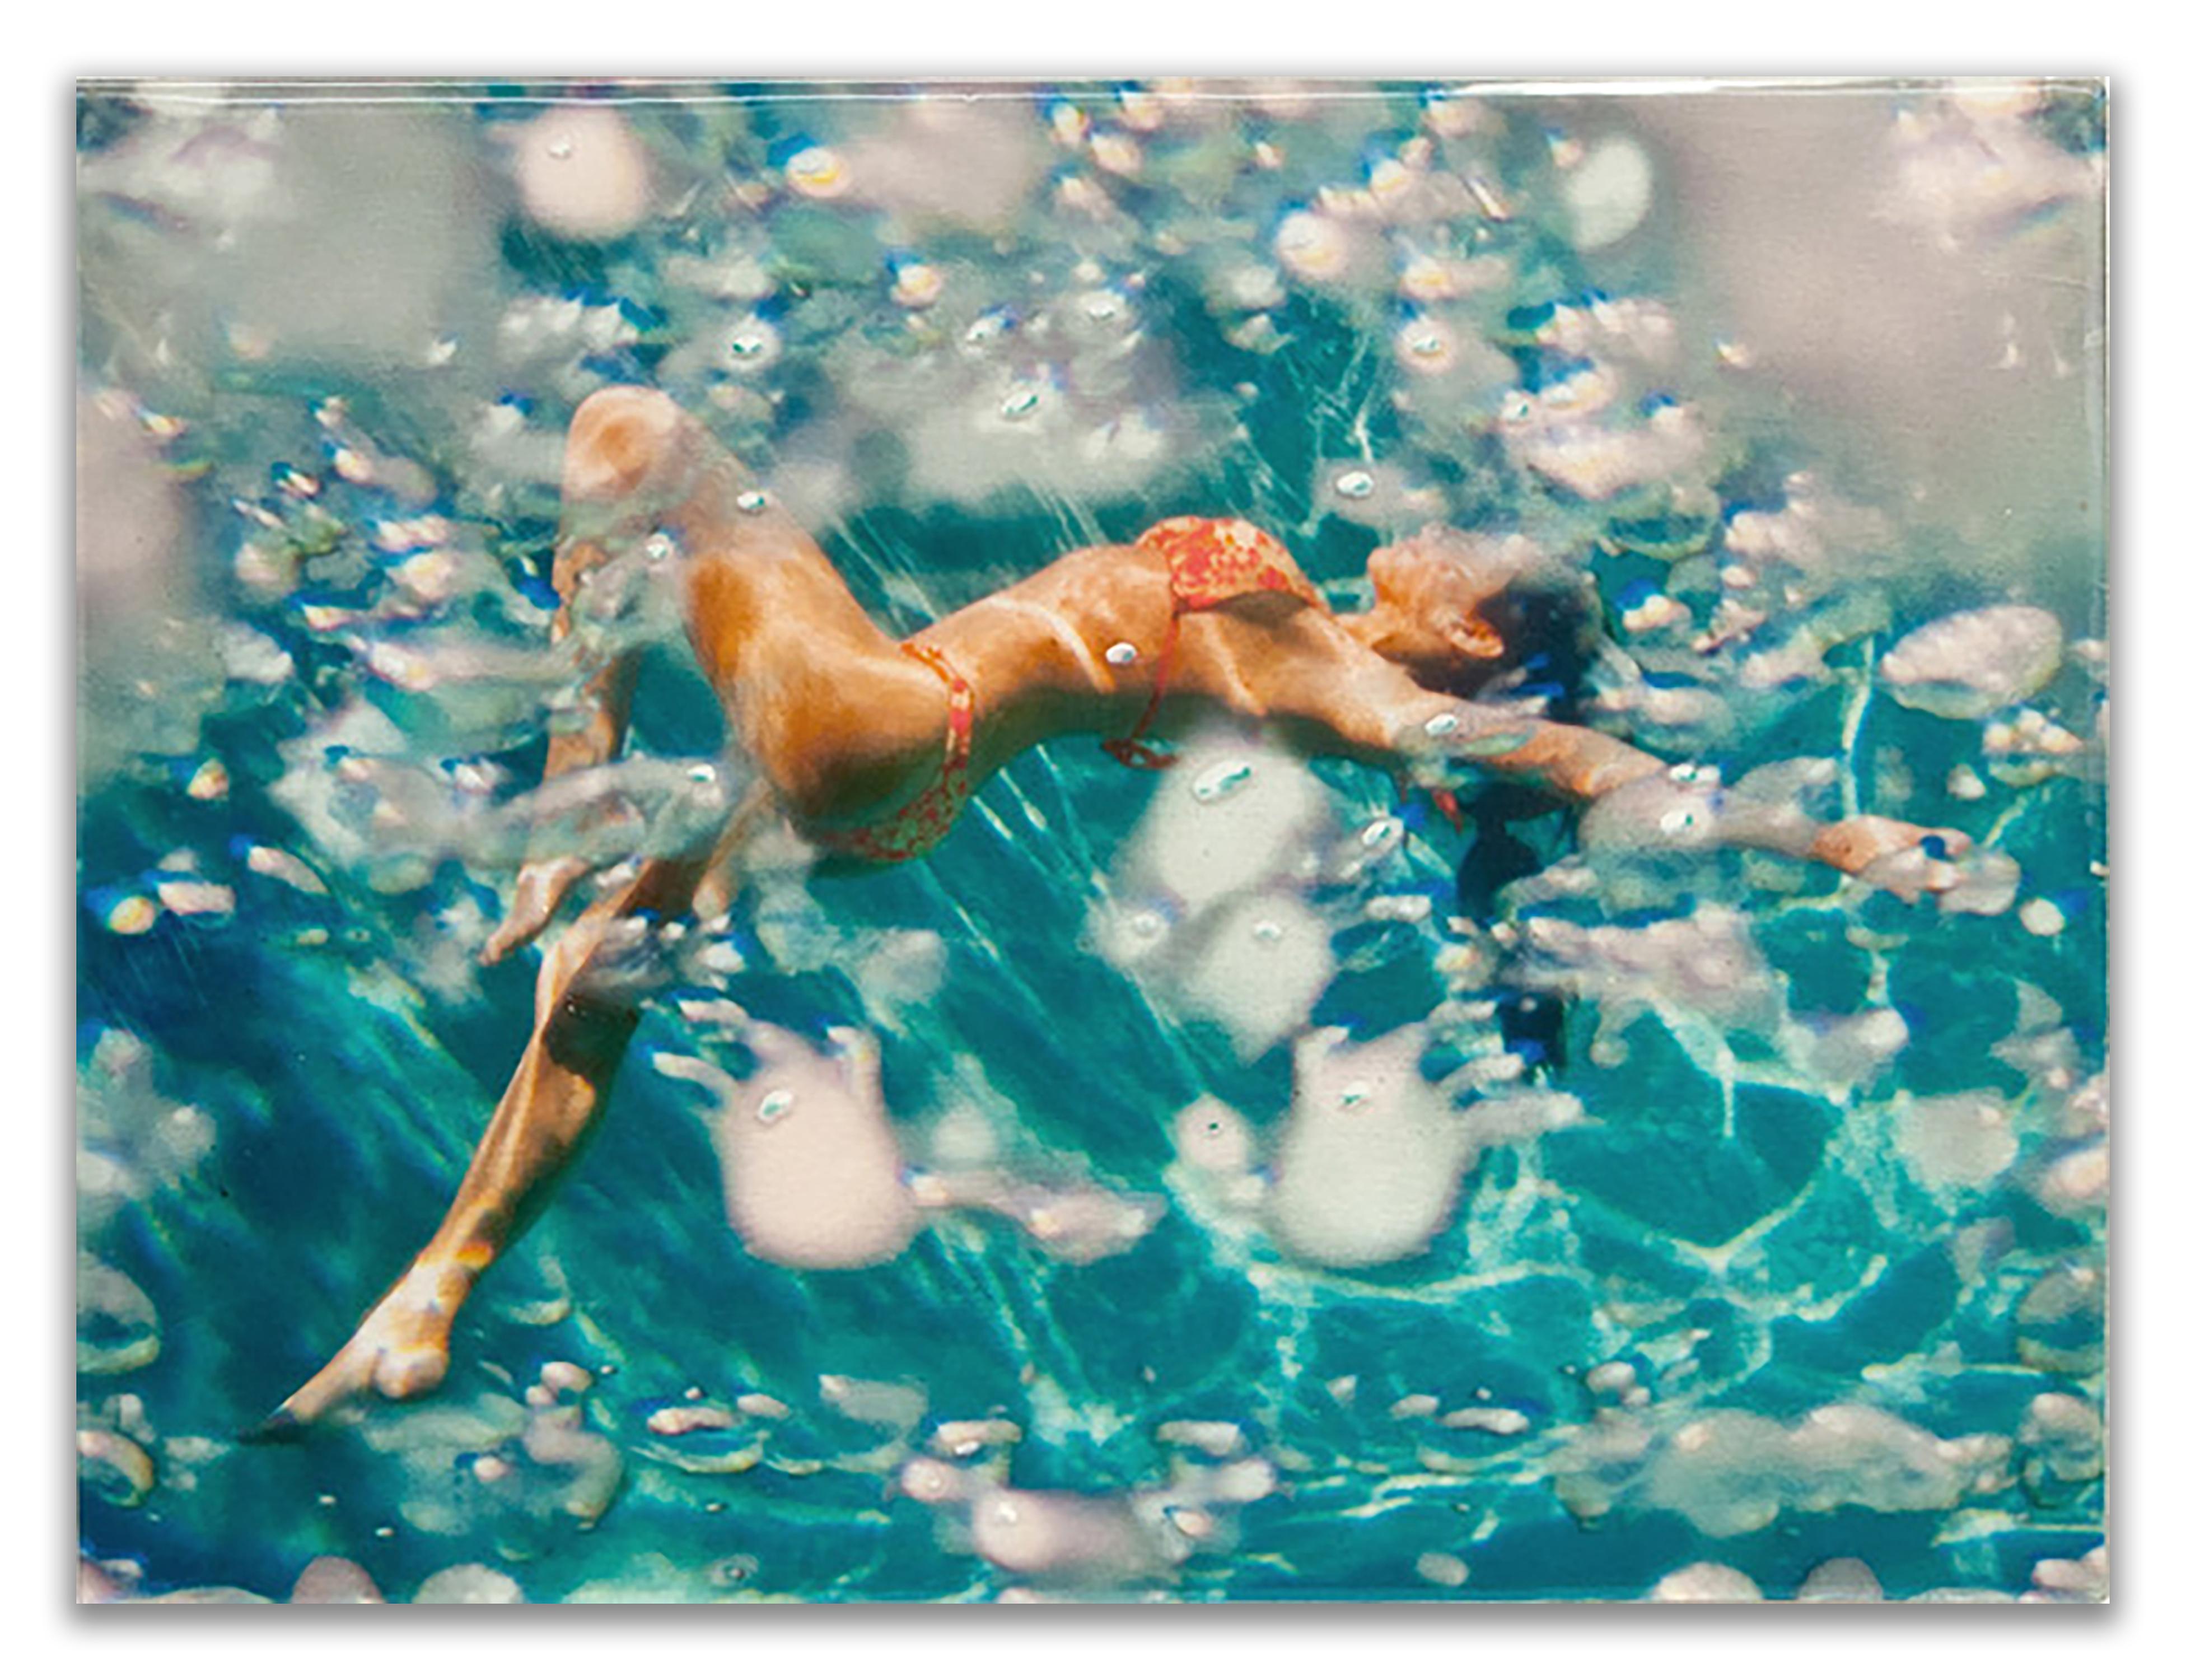 Joy / Swimming / Pool / Underwater / Photo-transparency Painting / Eric Zener